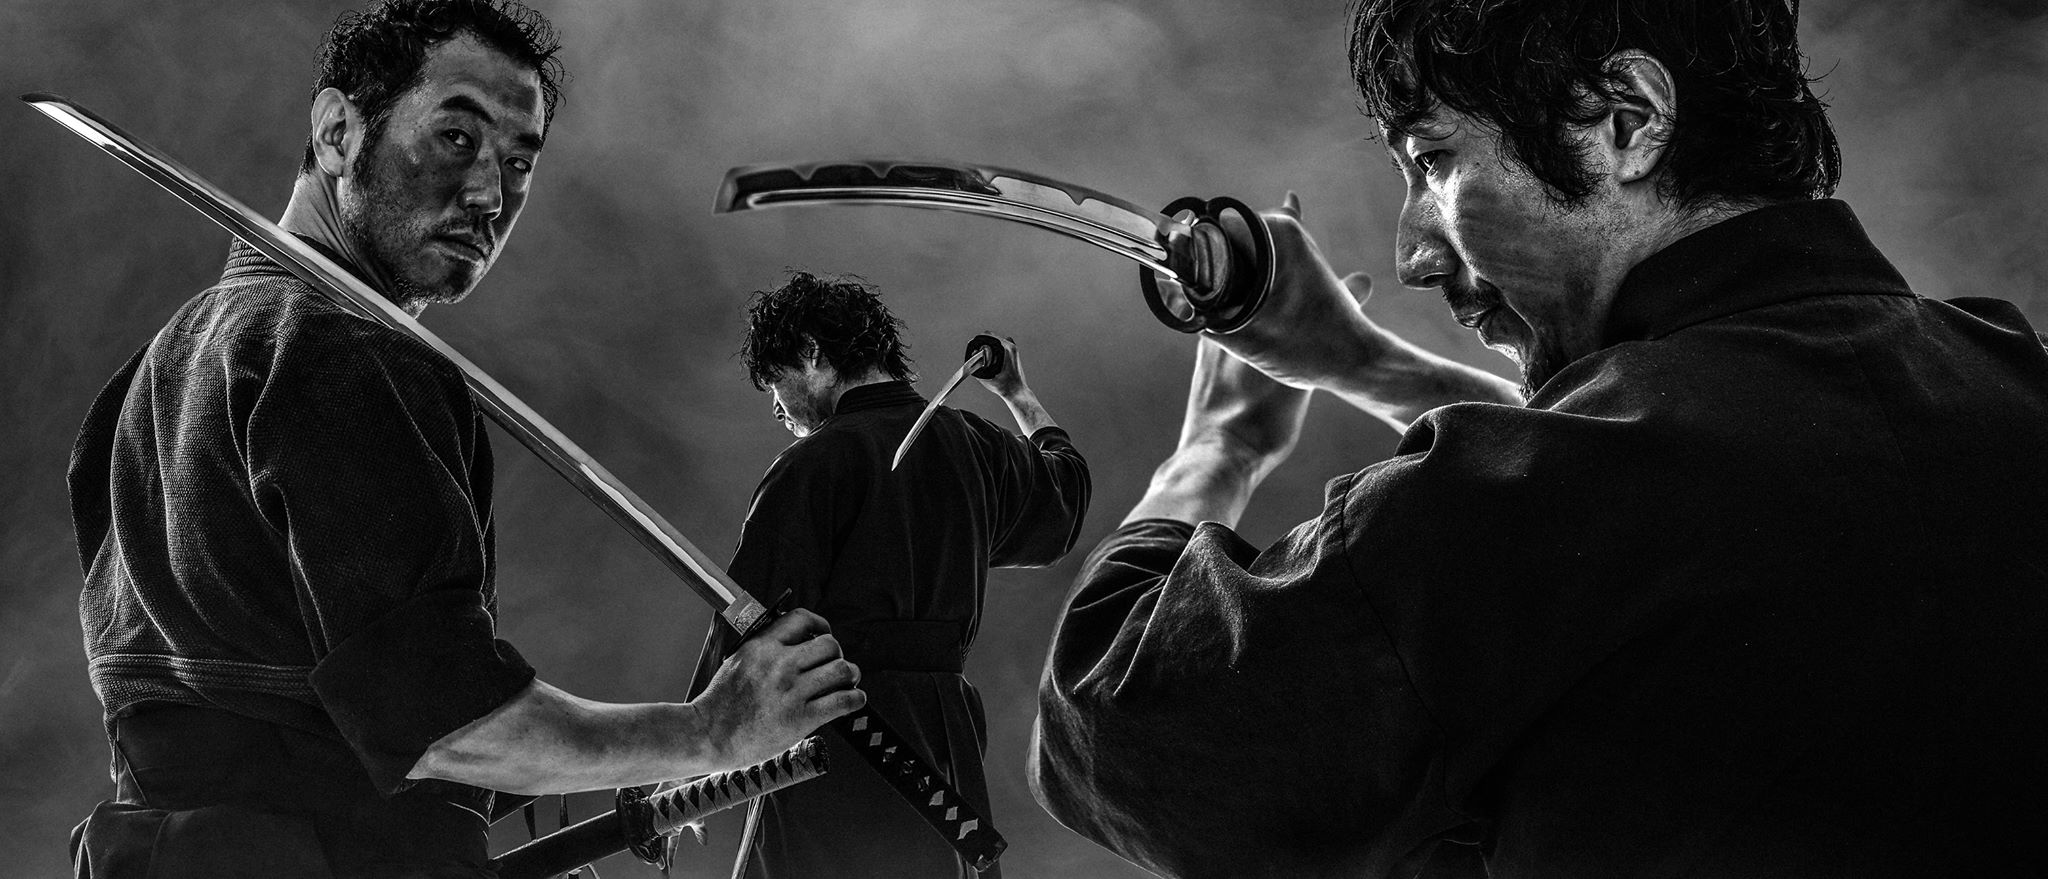 People 2048x879 samurai warrior men monochrome weapon sword katana